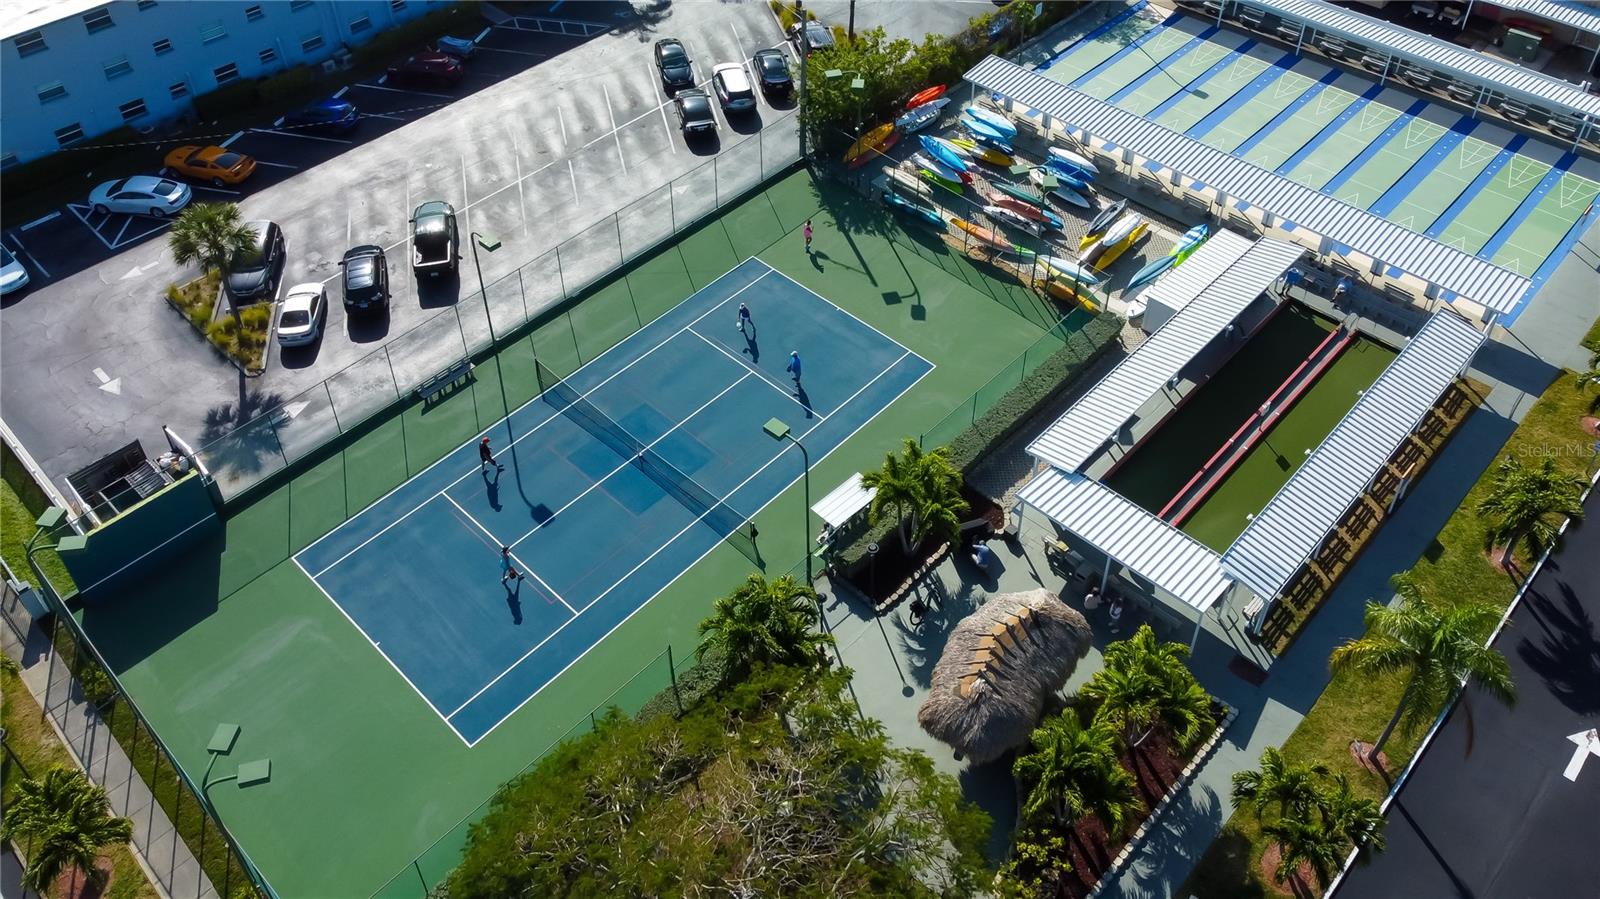 Aerial View of Tennis & Shuffleboard